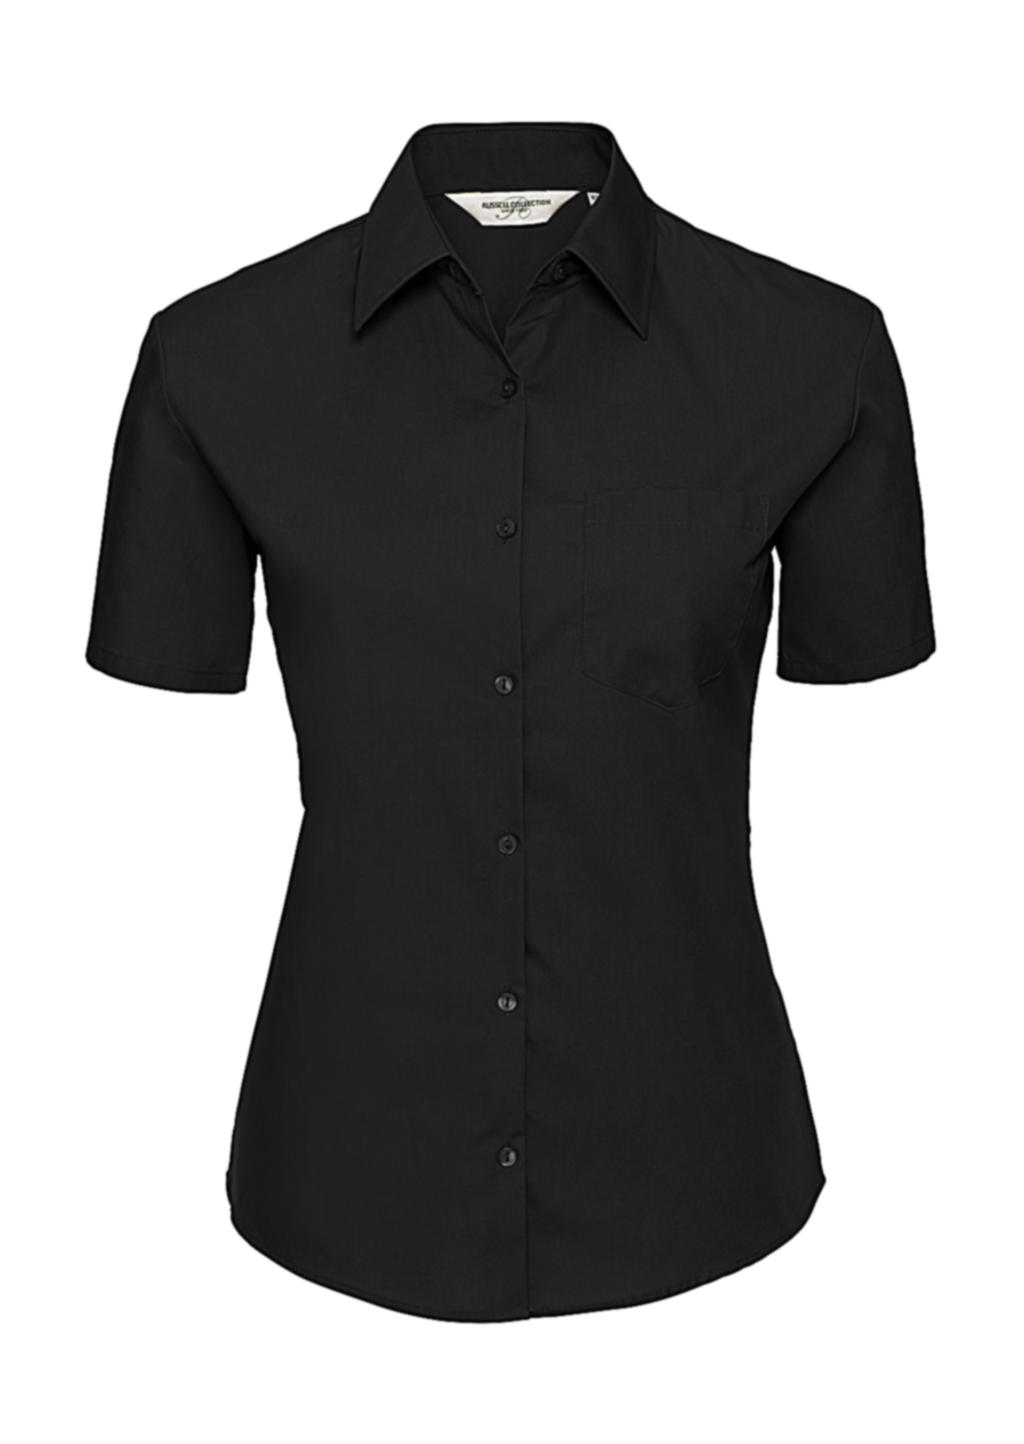  Ladies Cotton Poplin Shirt in Farbe Black